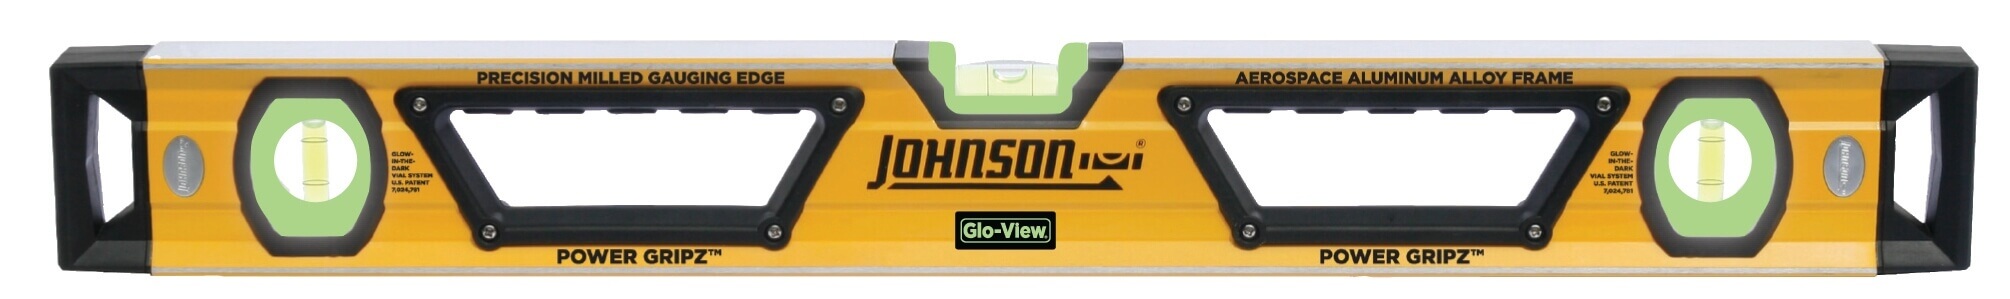 Johnson Level 48 Magnetic Glo-View Heavy Duty Aluminum Box Level 1718-4800